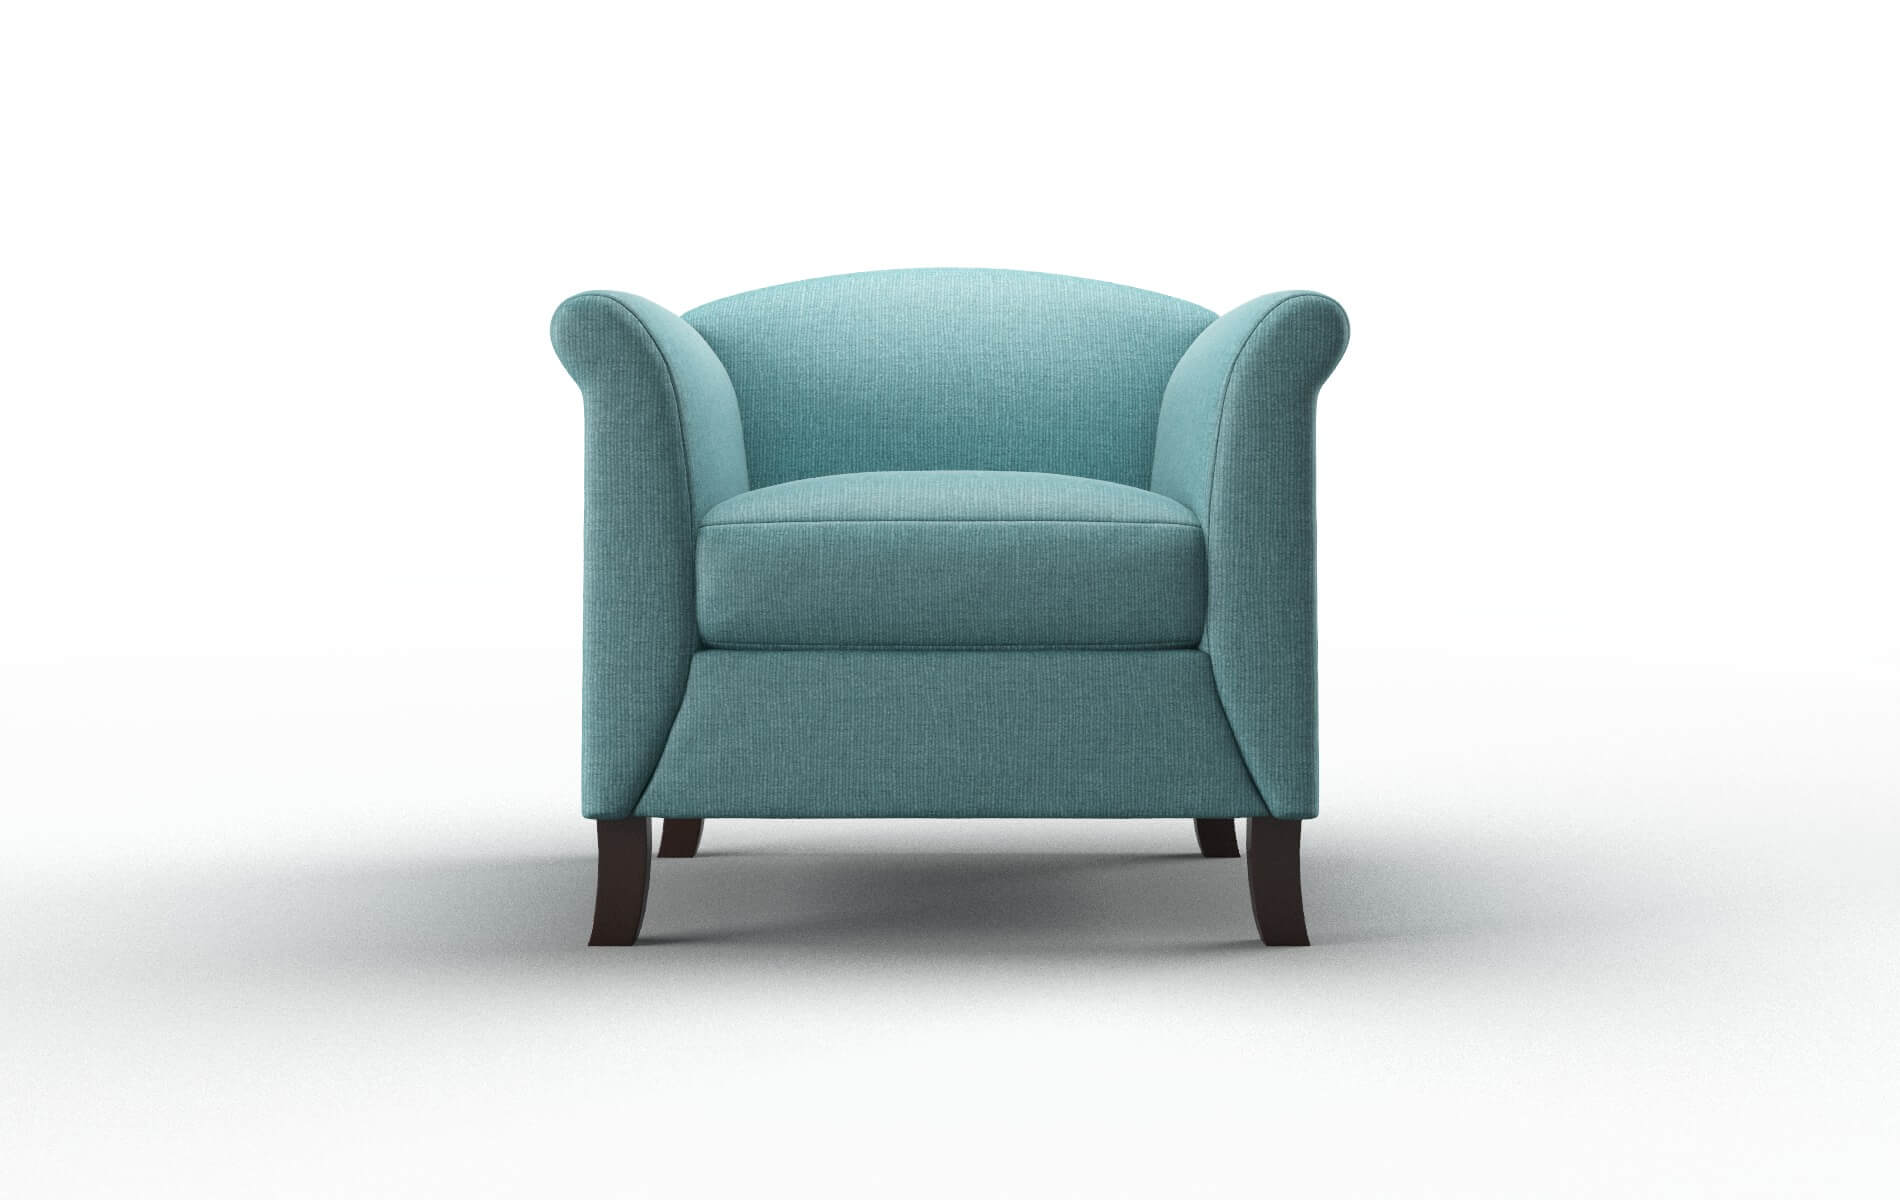 Crete Parker Turquoise Chair espresso legs 1